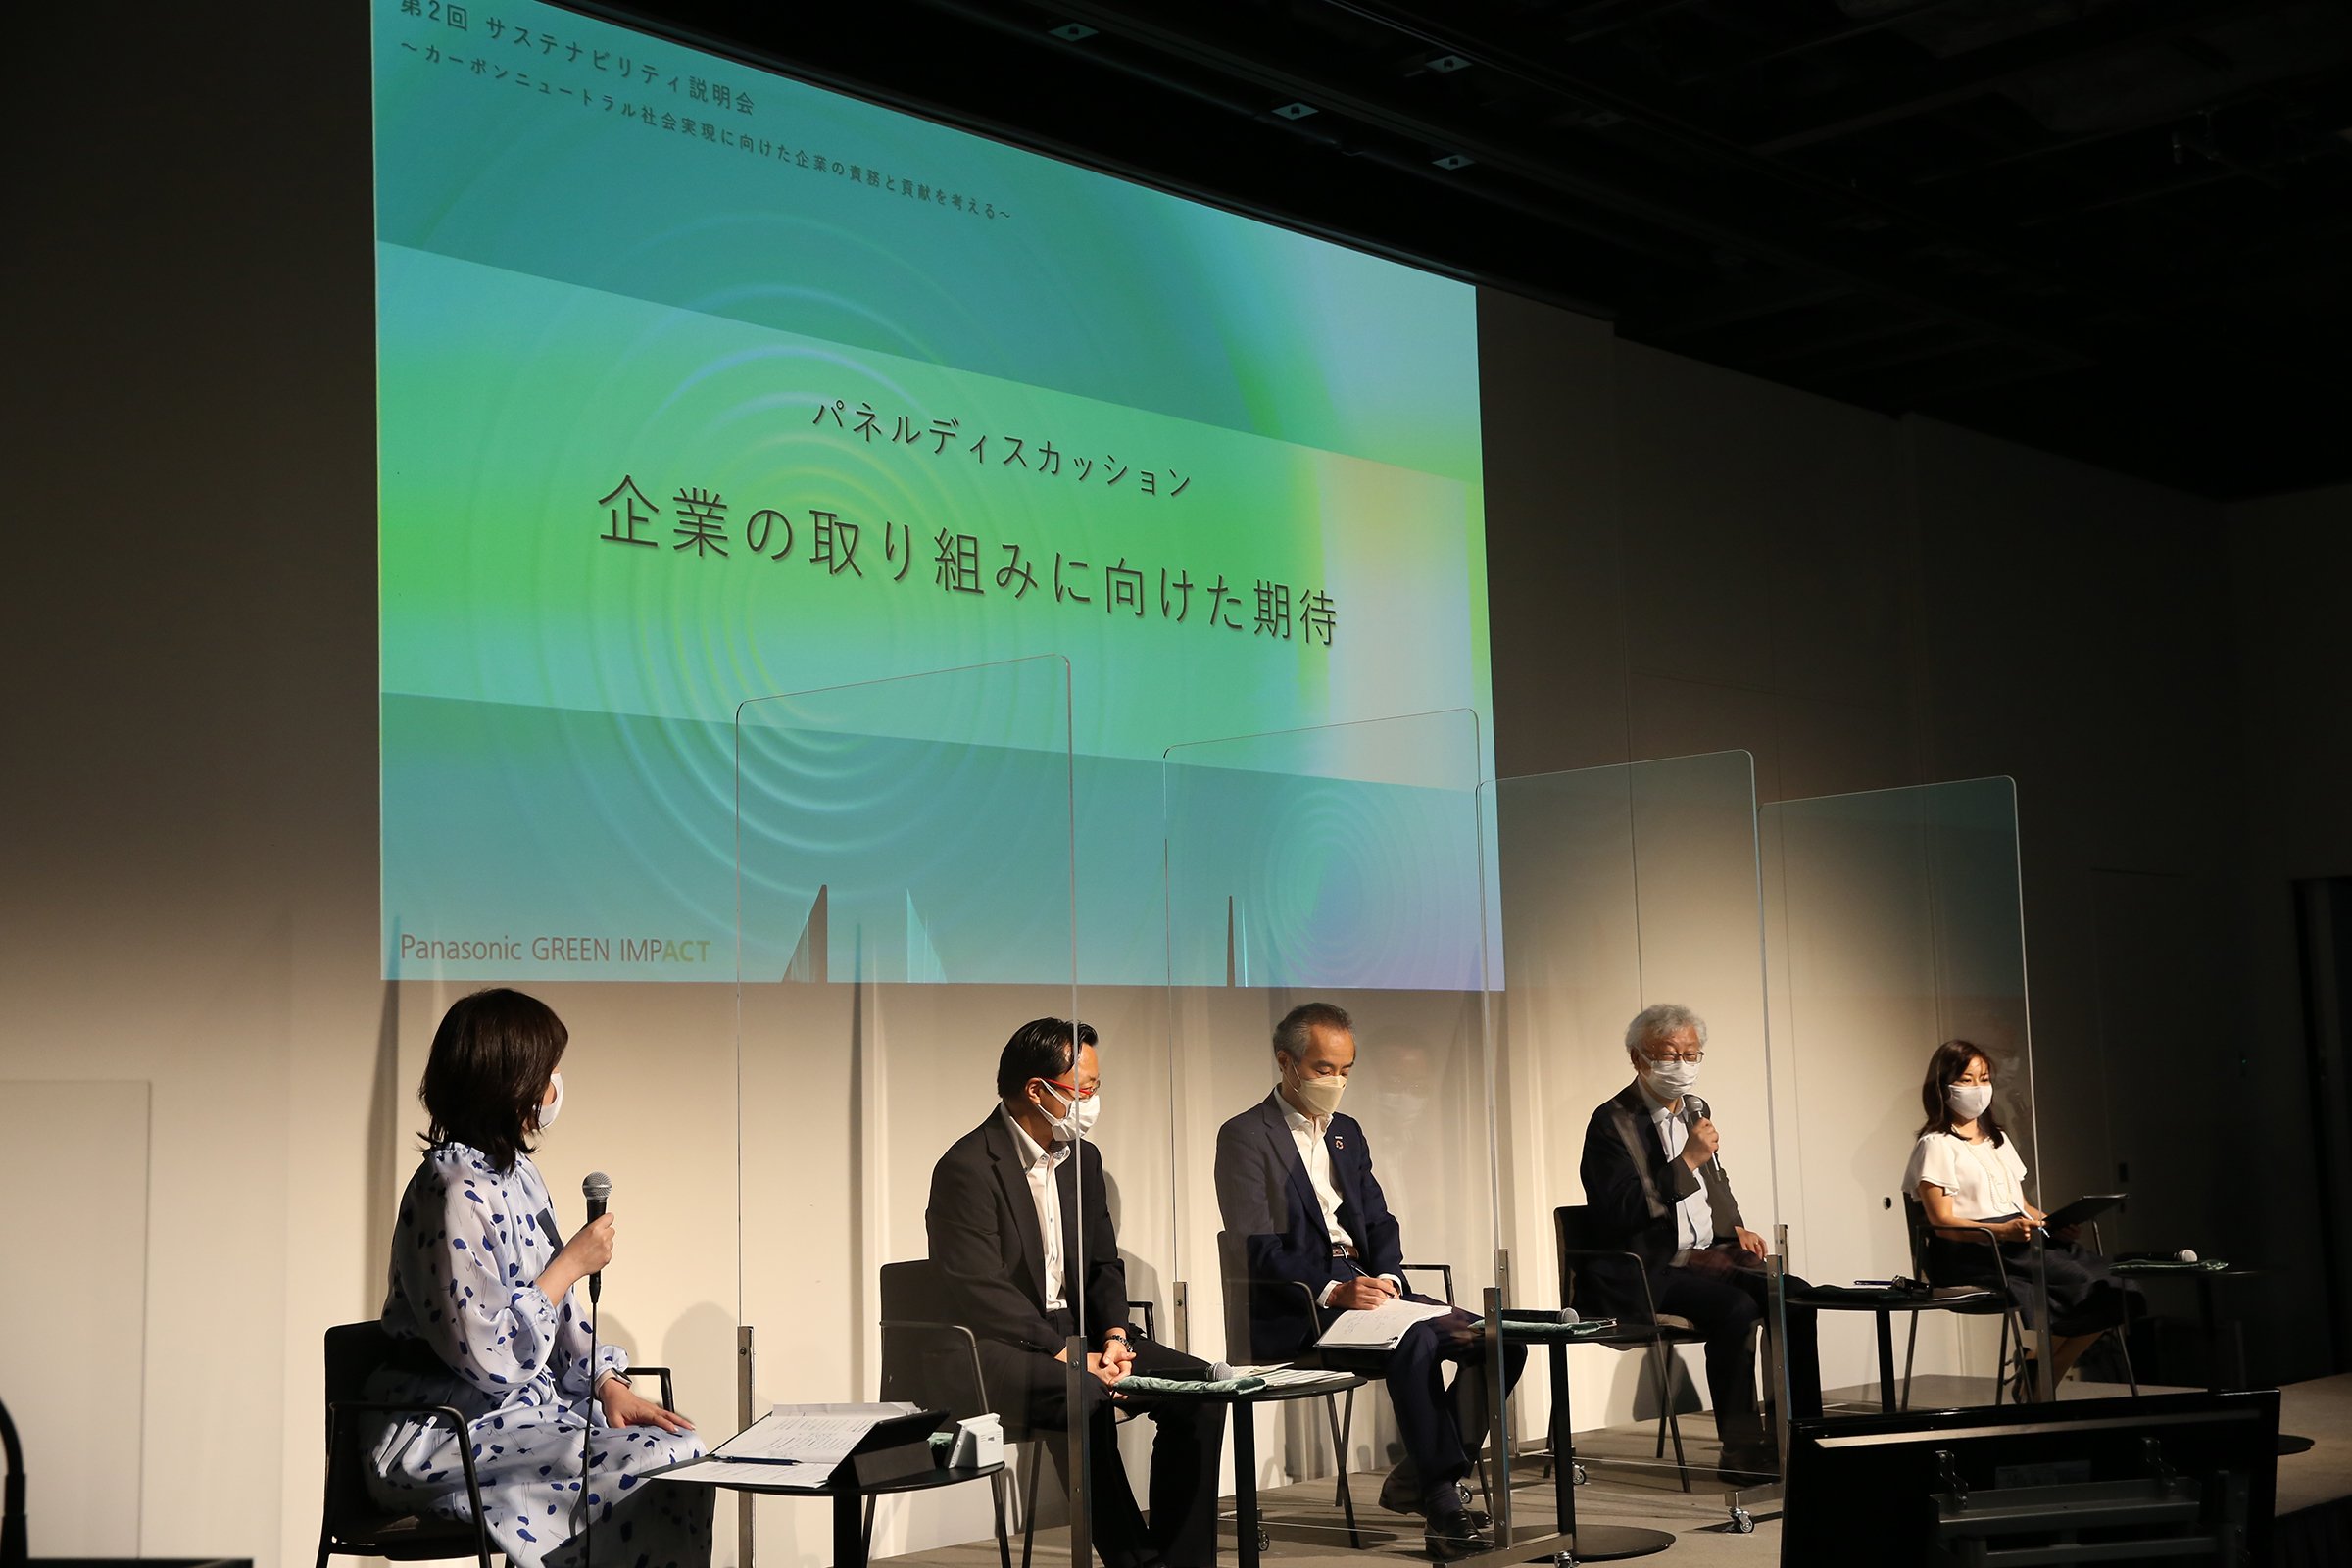 Photo: From left to right: Satoko Ito, Shinichi Kihara, Tatsuo Ogawa, Motoshige Itoh, Emi Onozuka